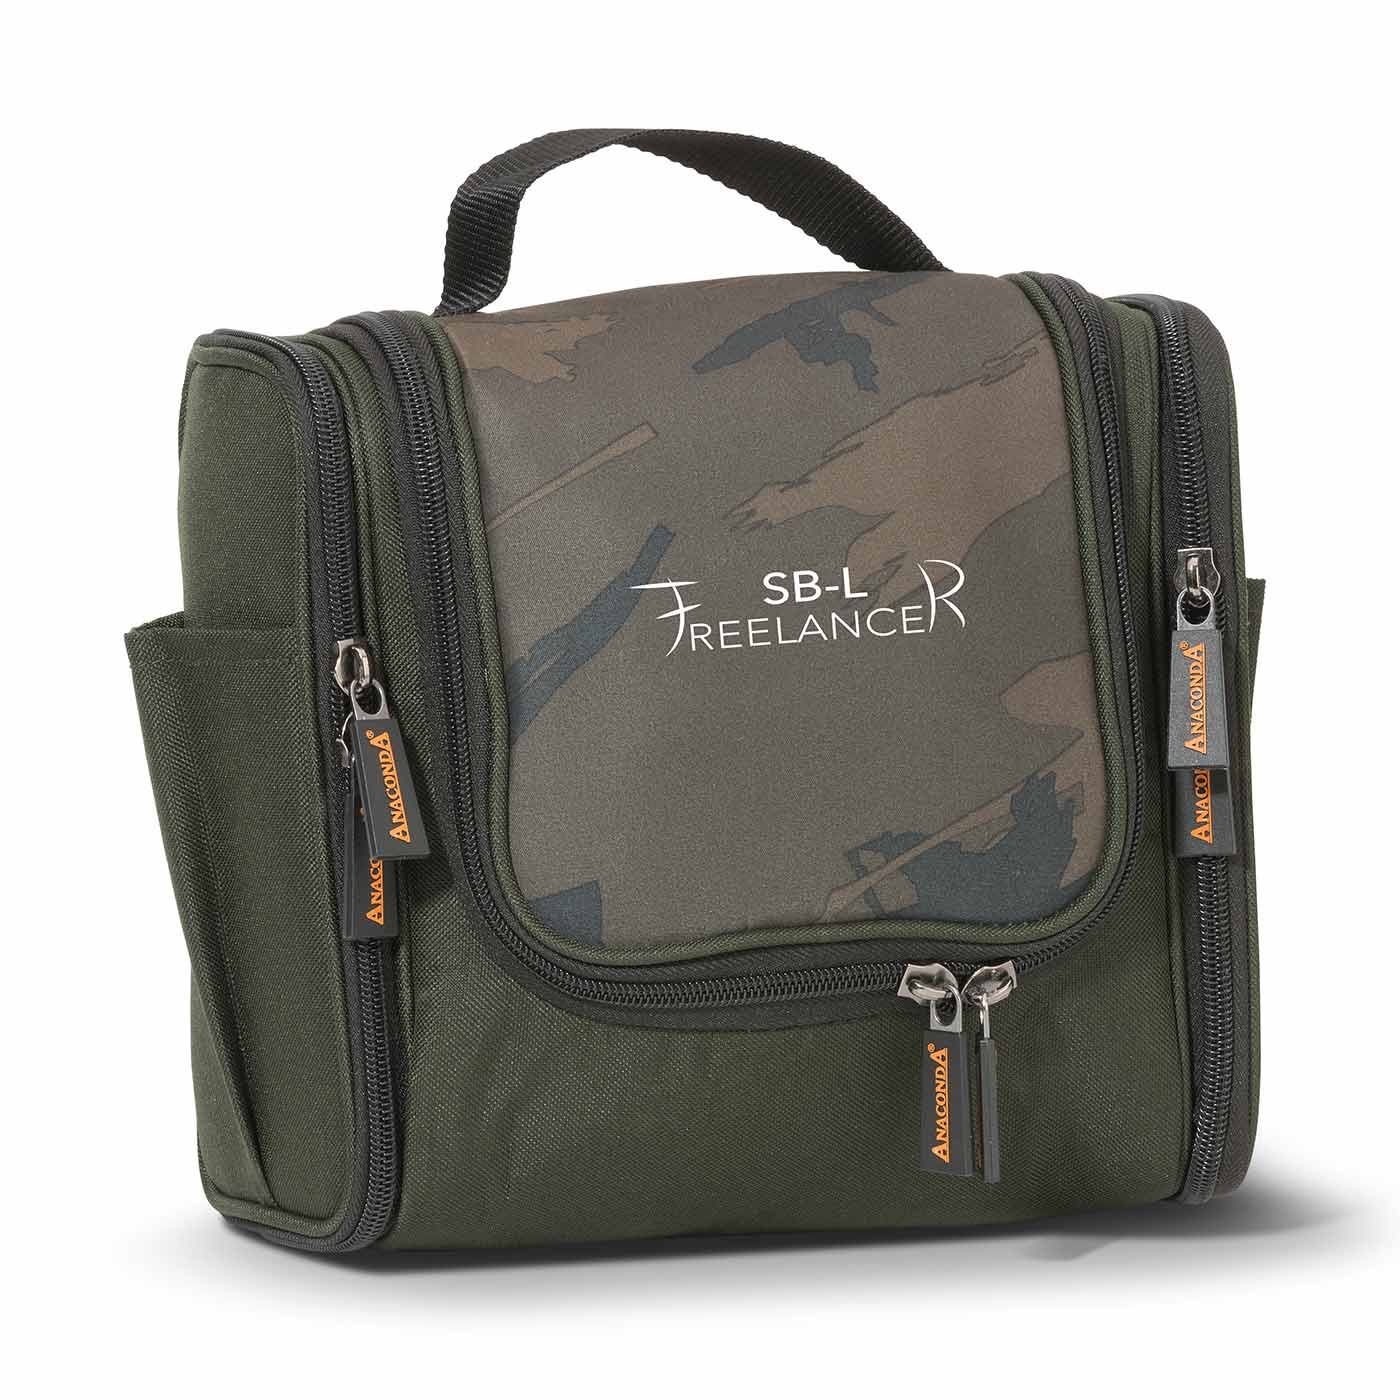 Anaconda Sänger Anaconda Freelancer Gear Bag S/M/L at low prices